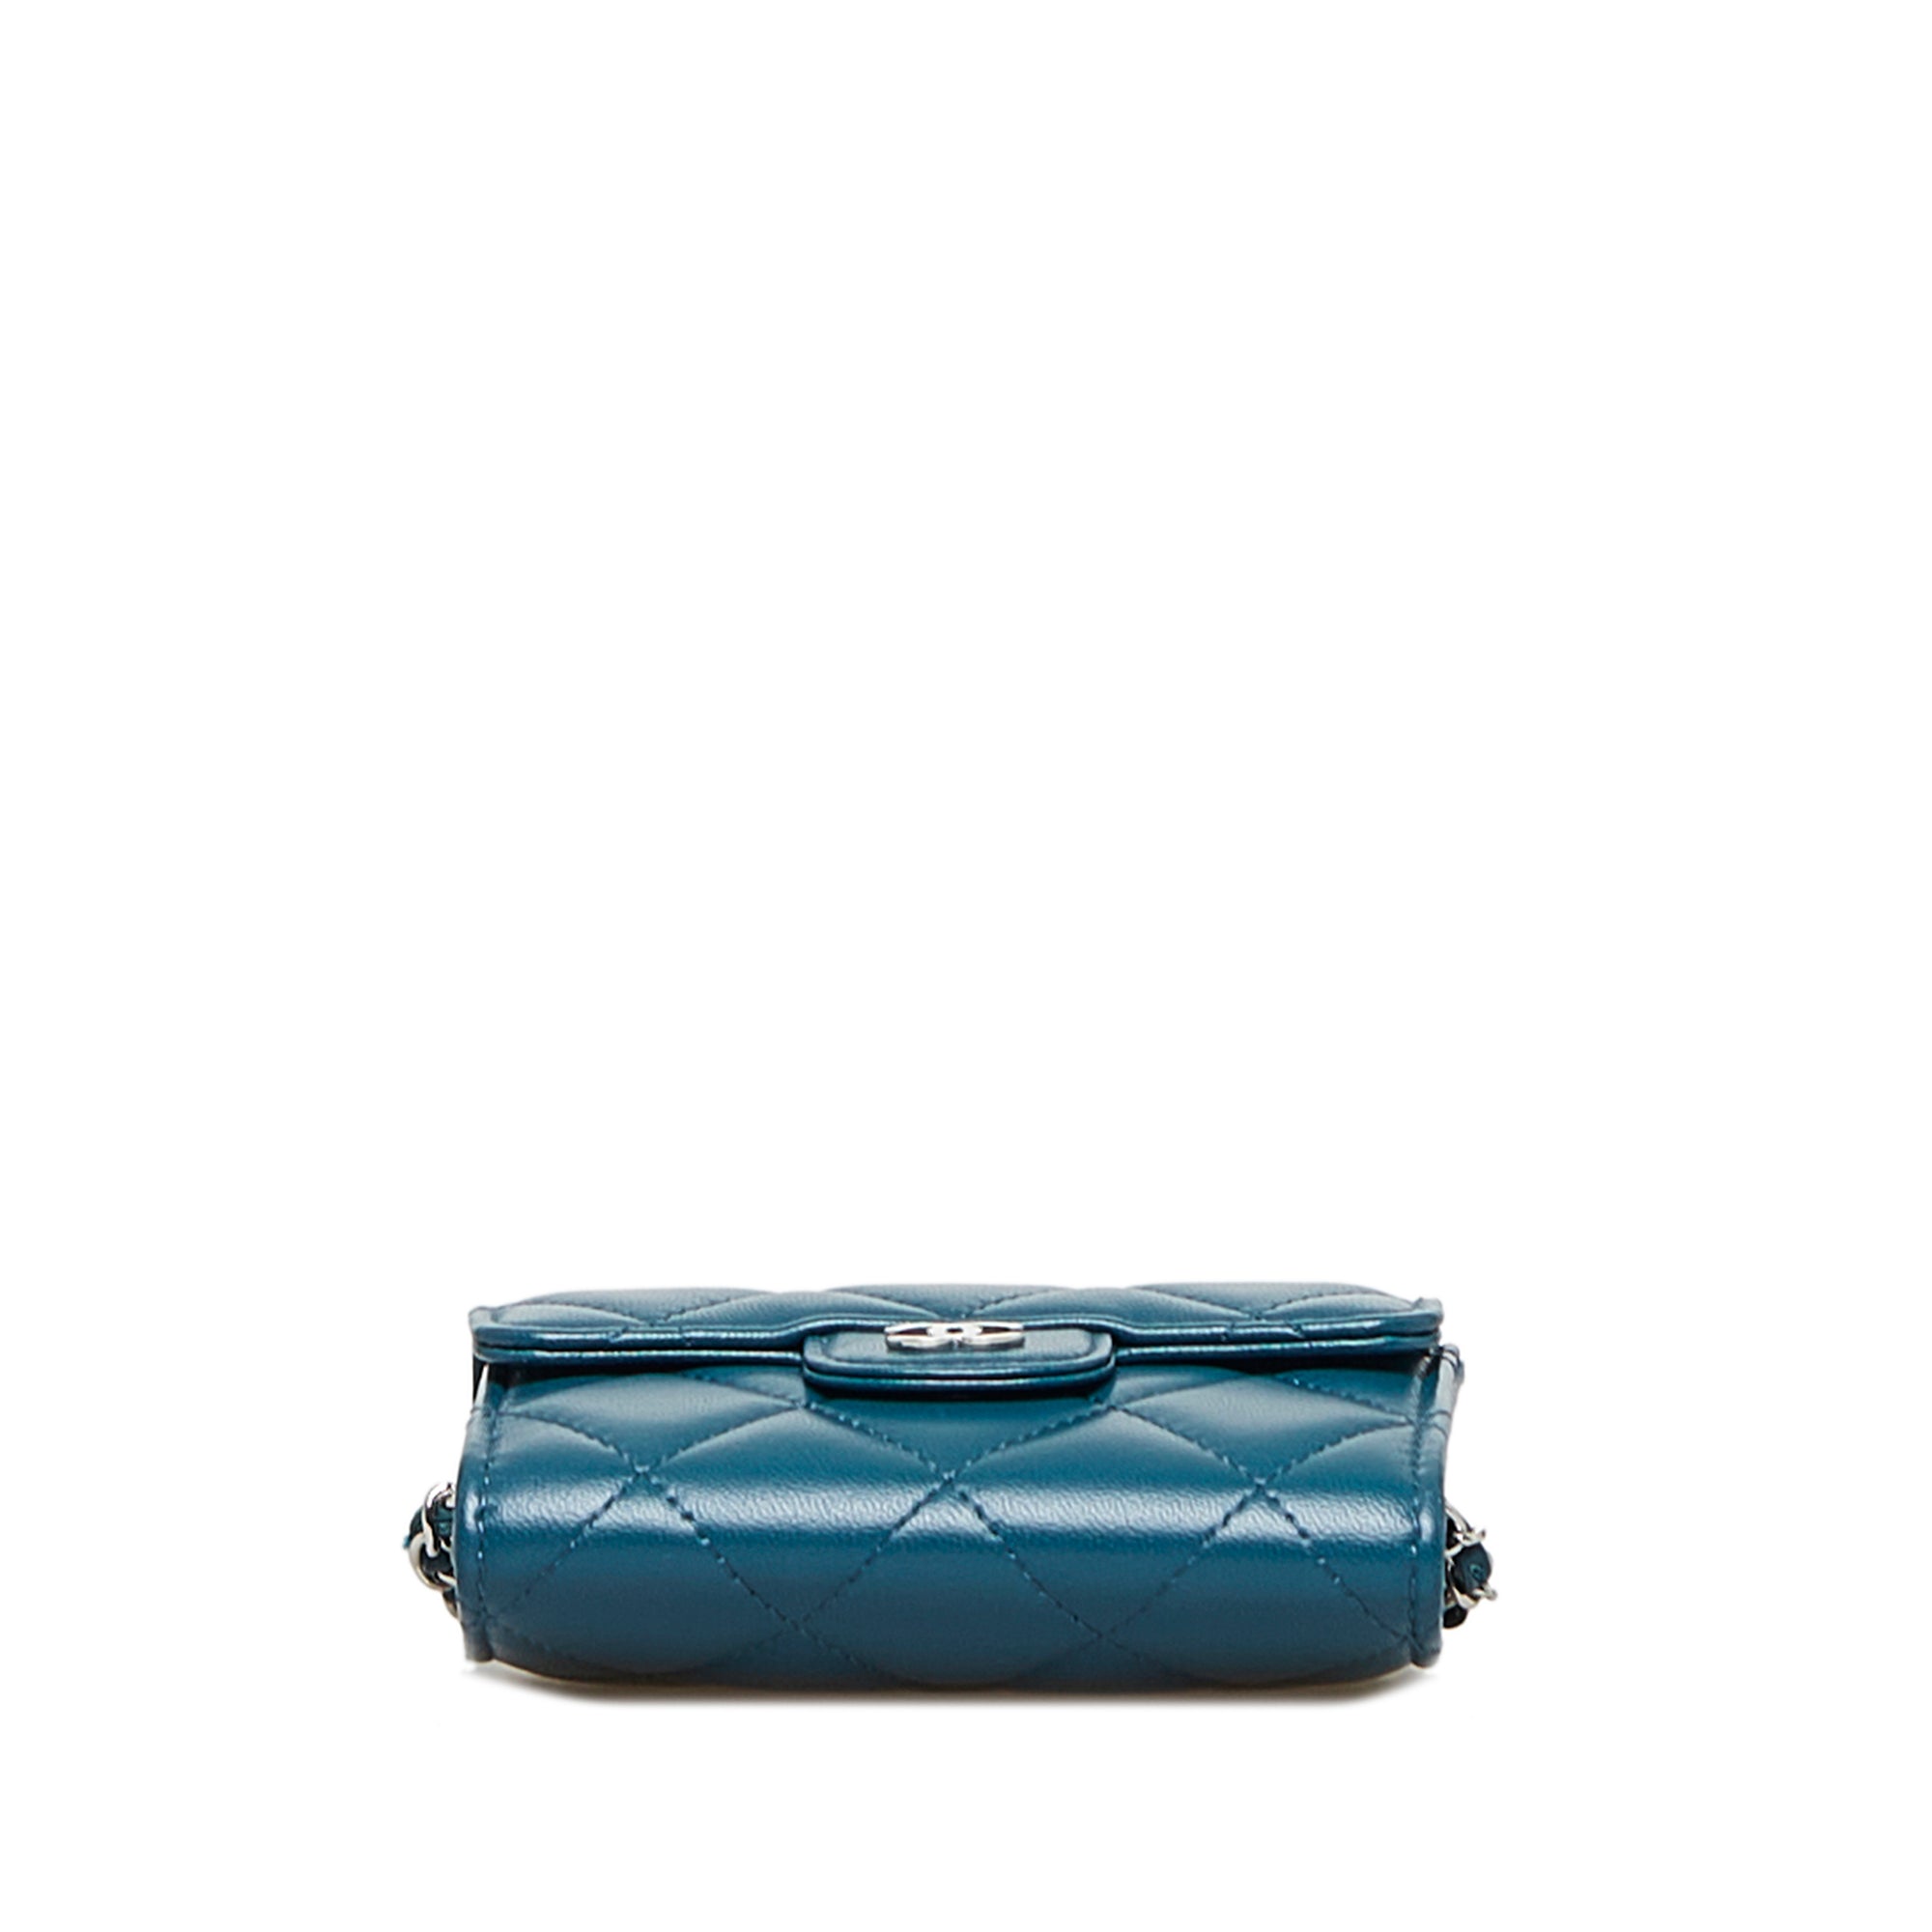 Chanel Blue Wallet - 35 For Sale on 1stDibs